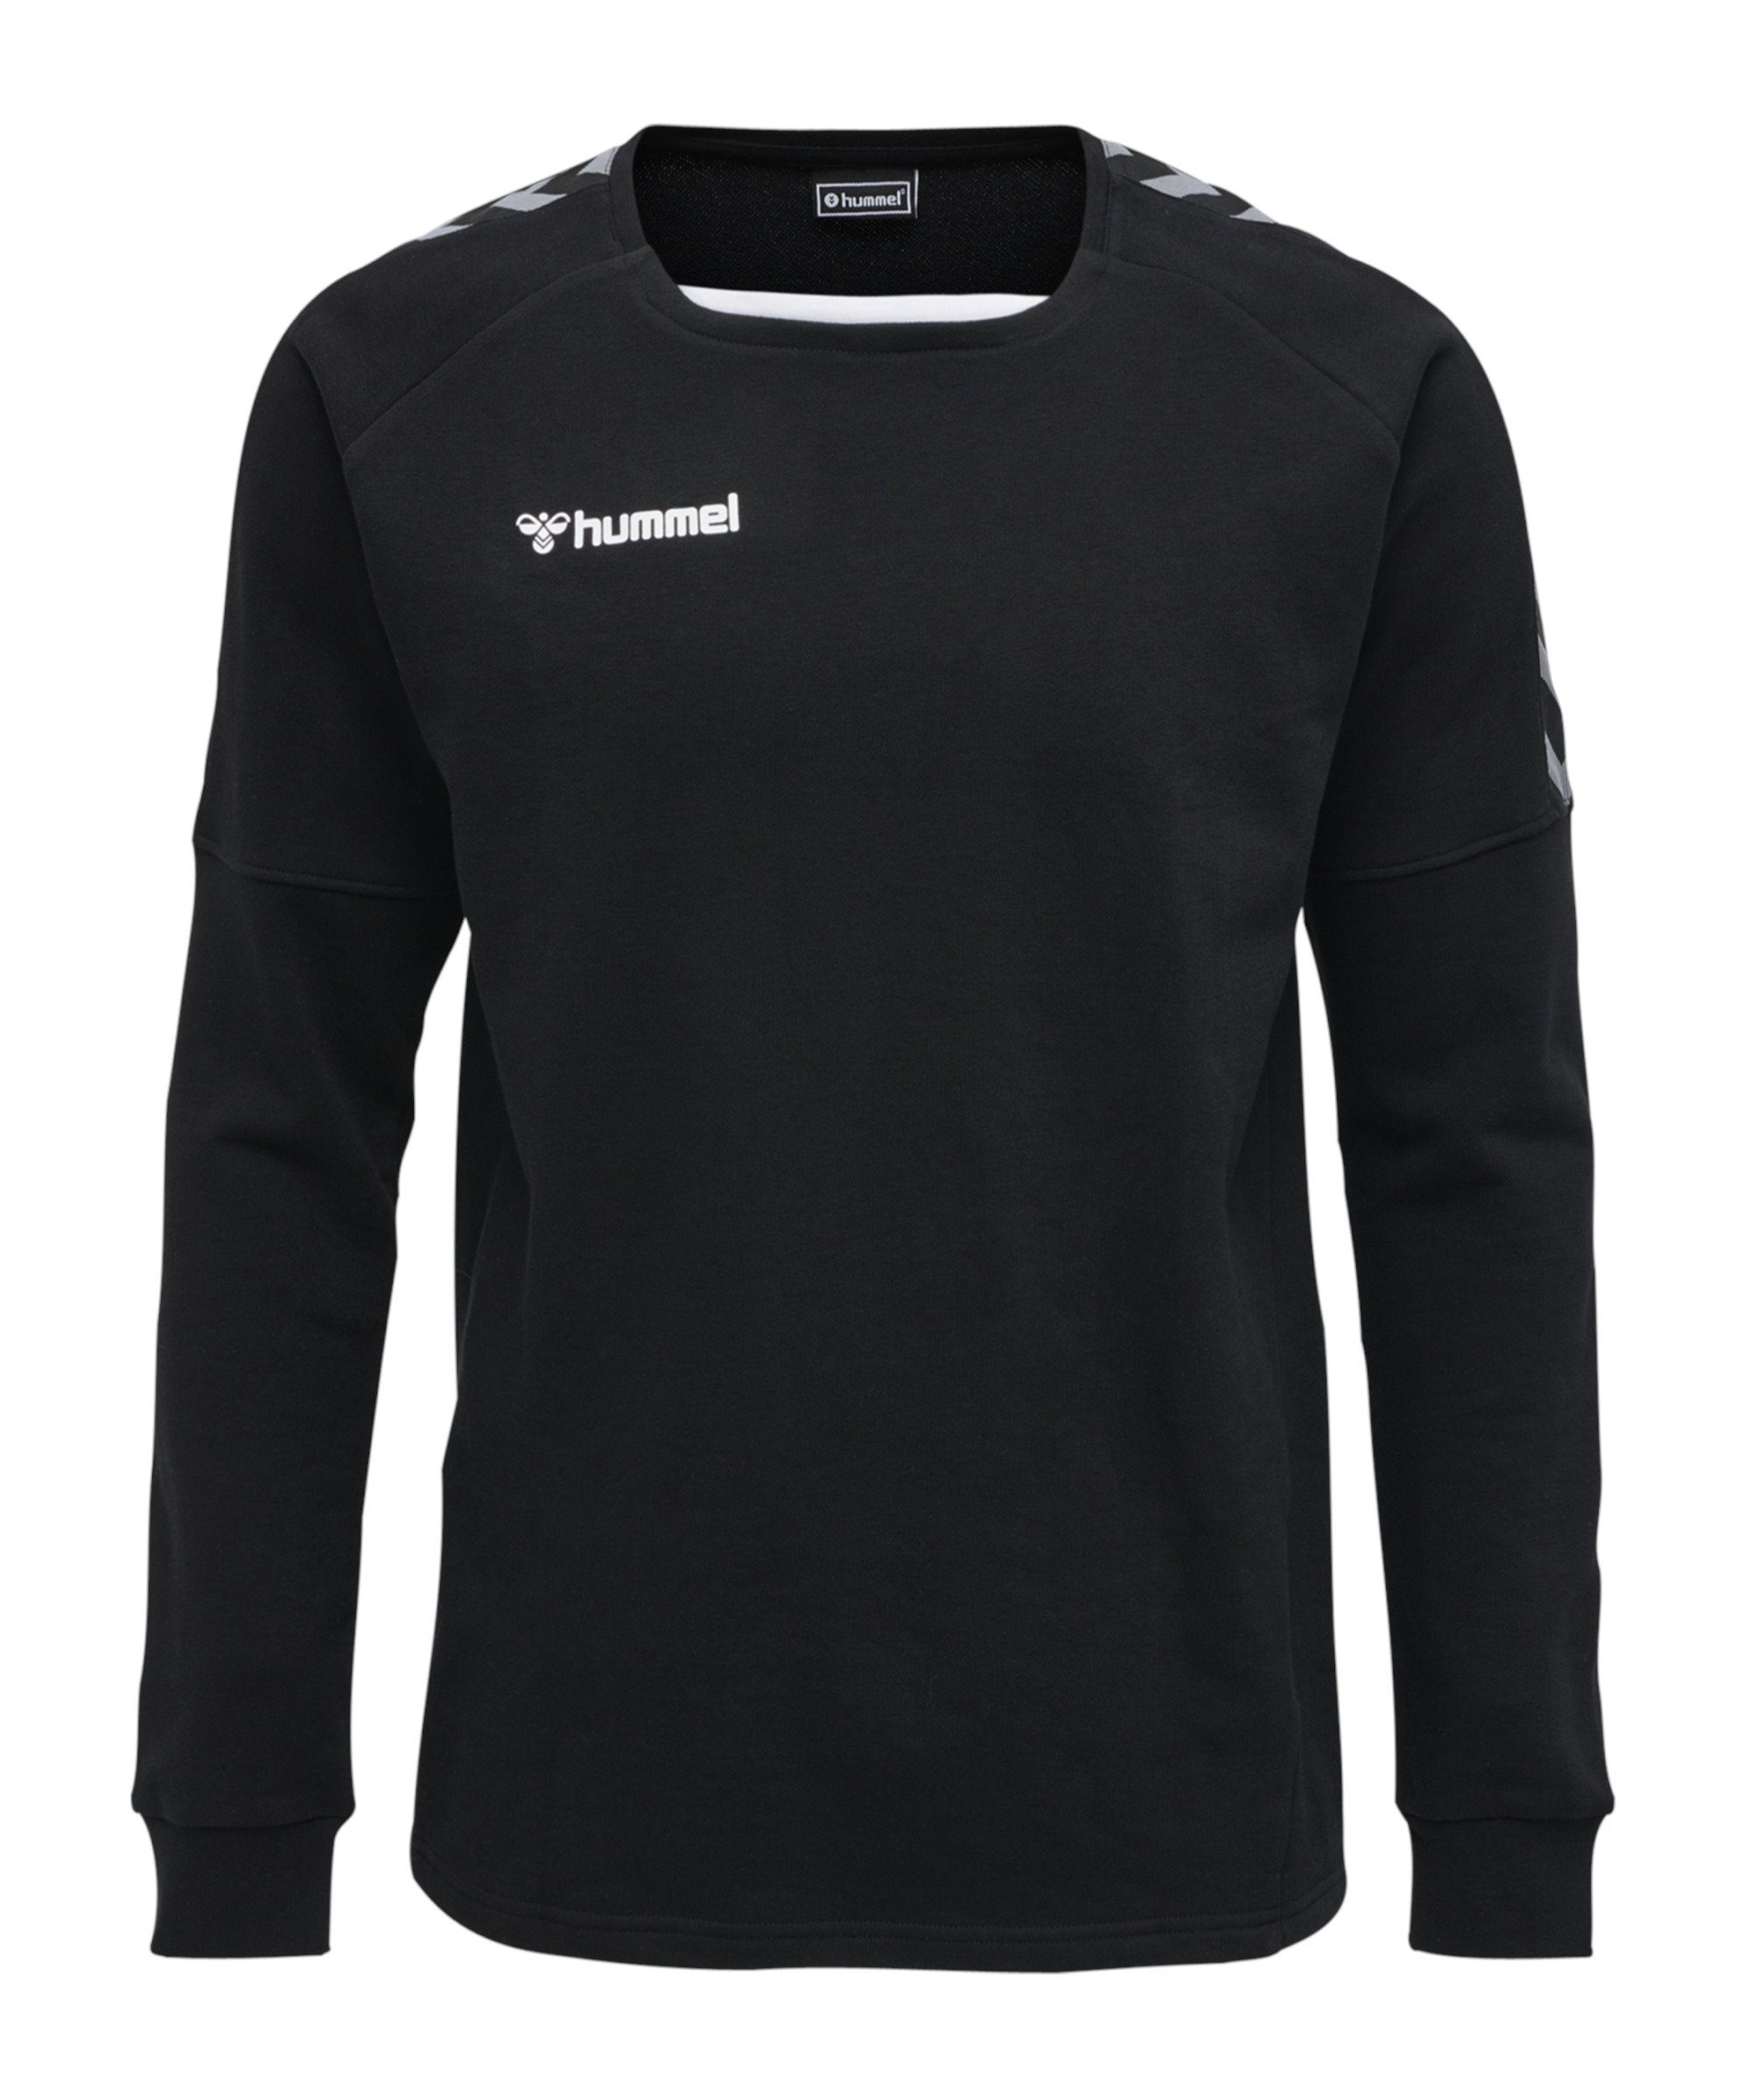 hummel Sweatshirt Authentic Training Sweatshirt schwarzweiss